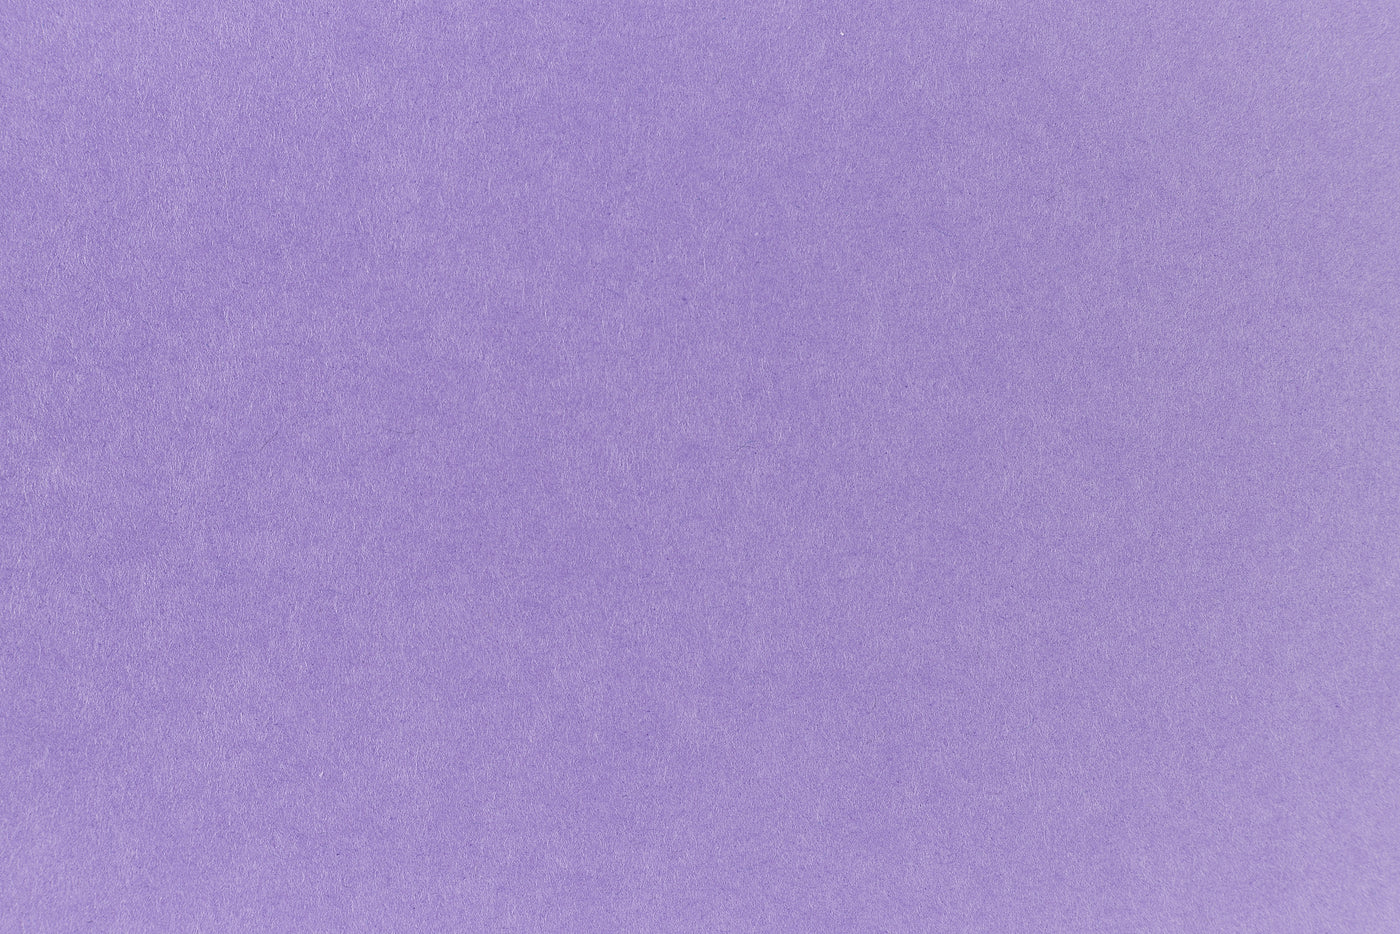 Grape Jelly Envelope (Pop-Tone)